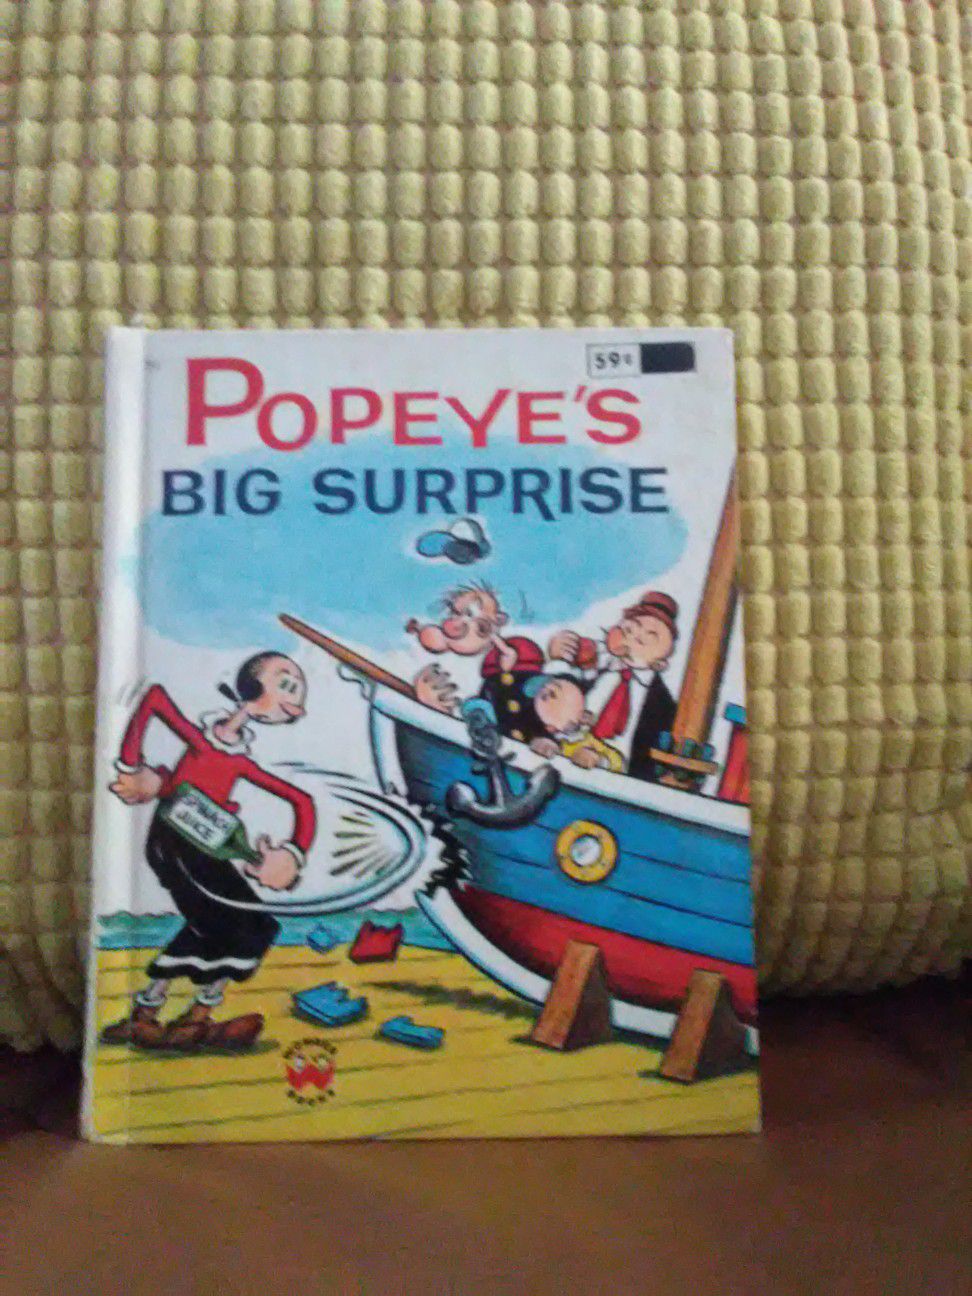 VINTAGE POPEYE'S BIG SURPRISE BOOK